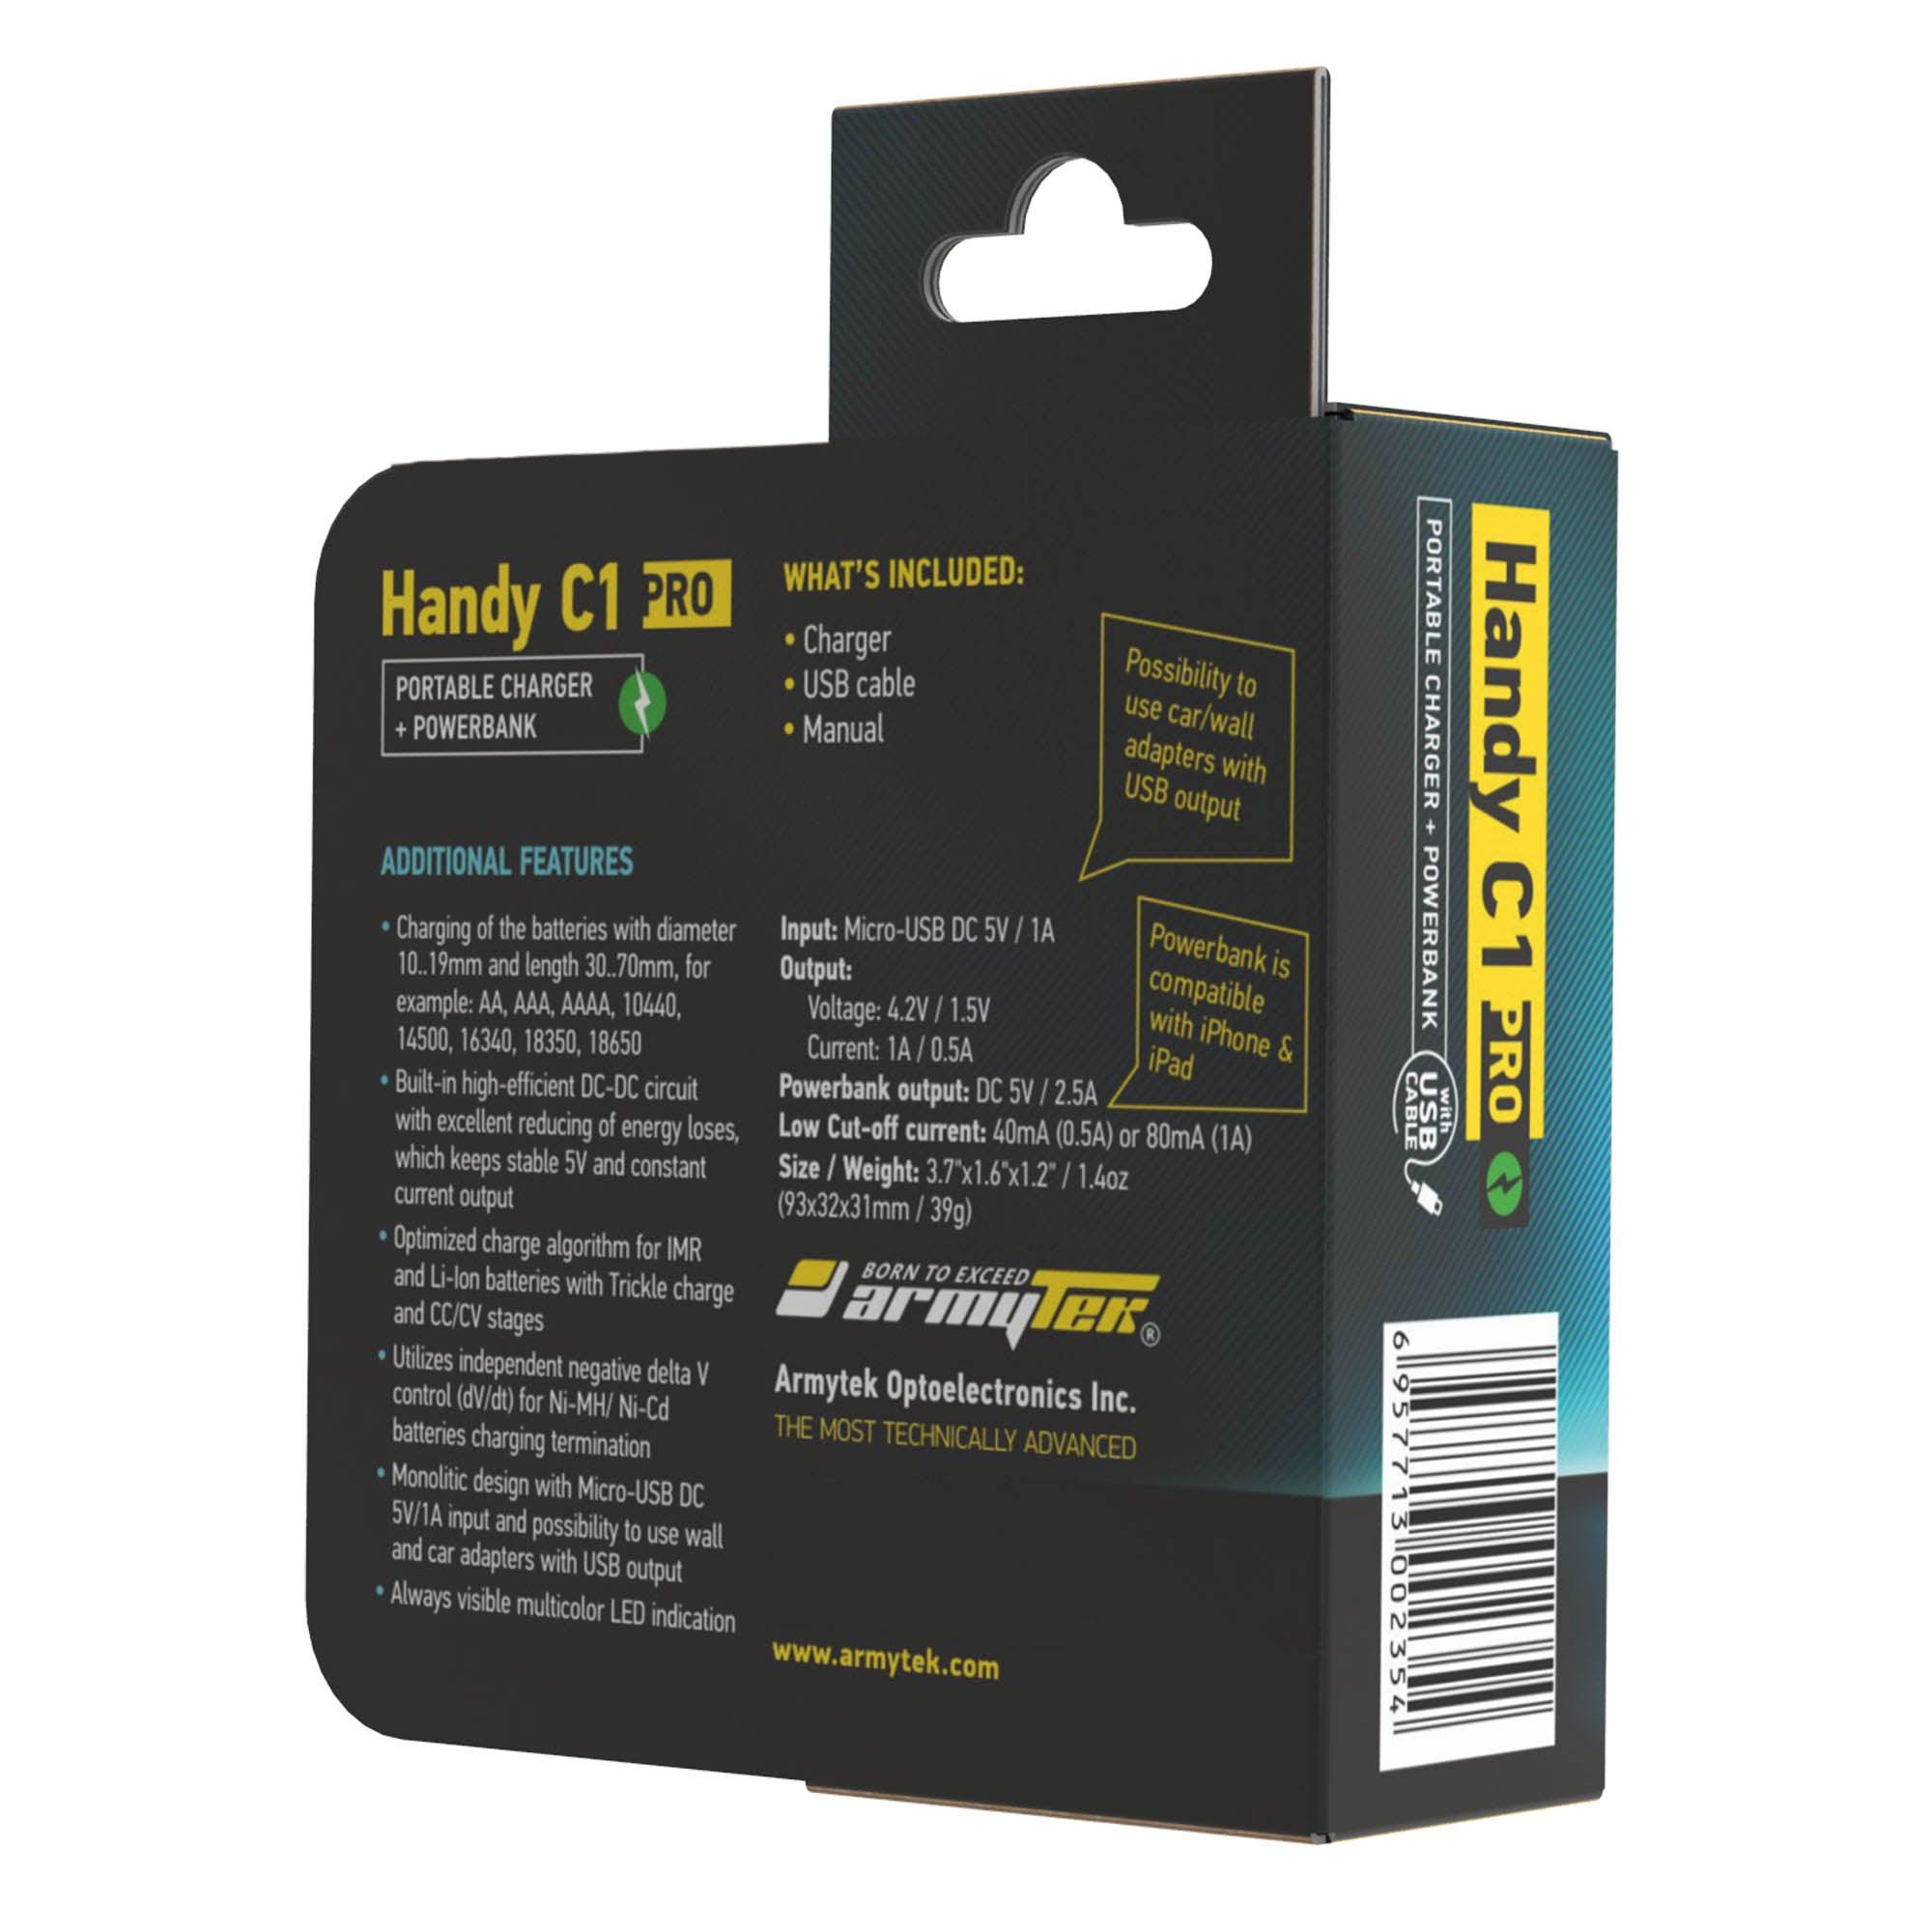 Armytek Batterie / Handy Ladegerät C1 PRO